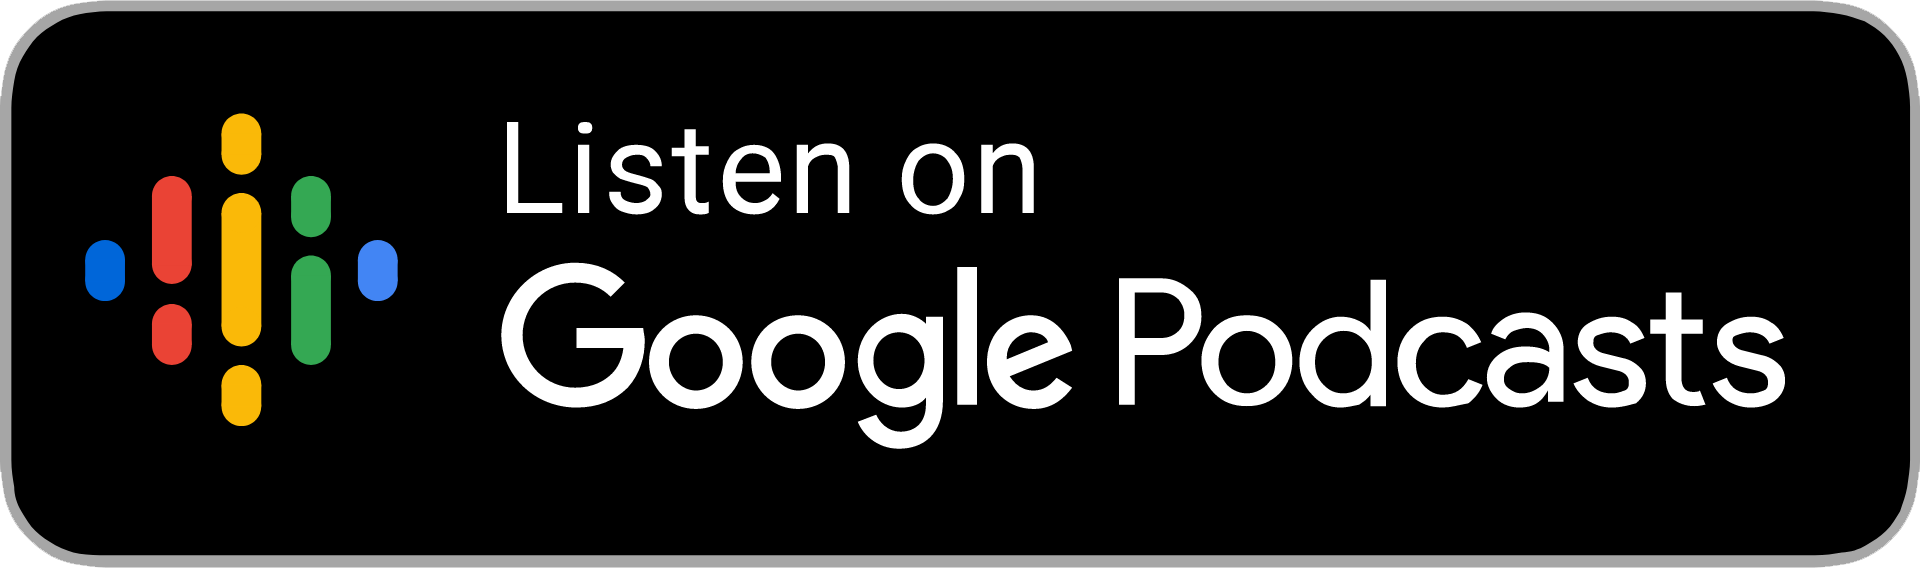 podcast-badge-google.png